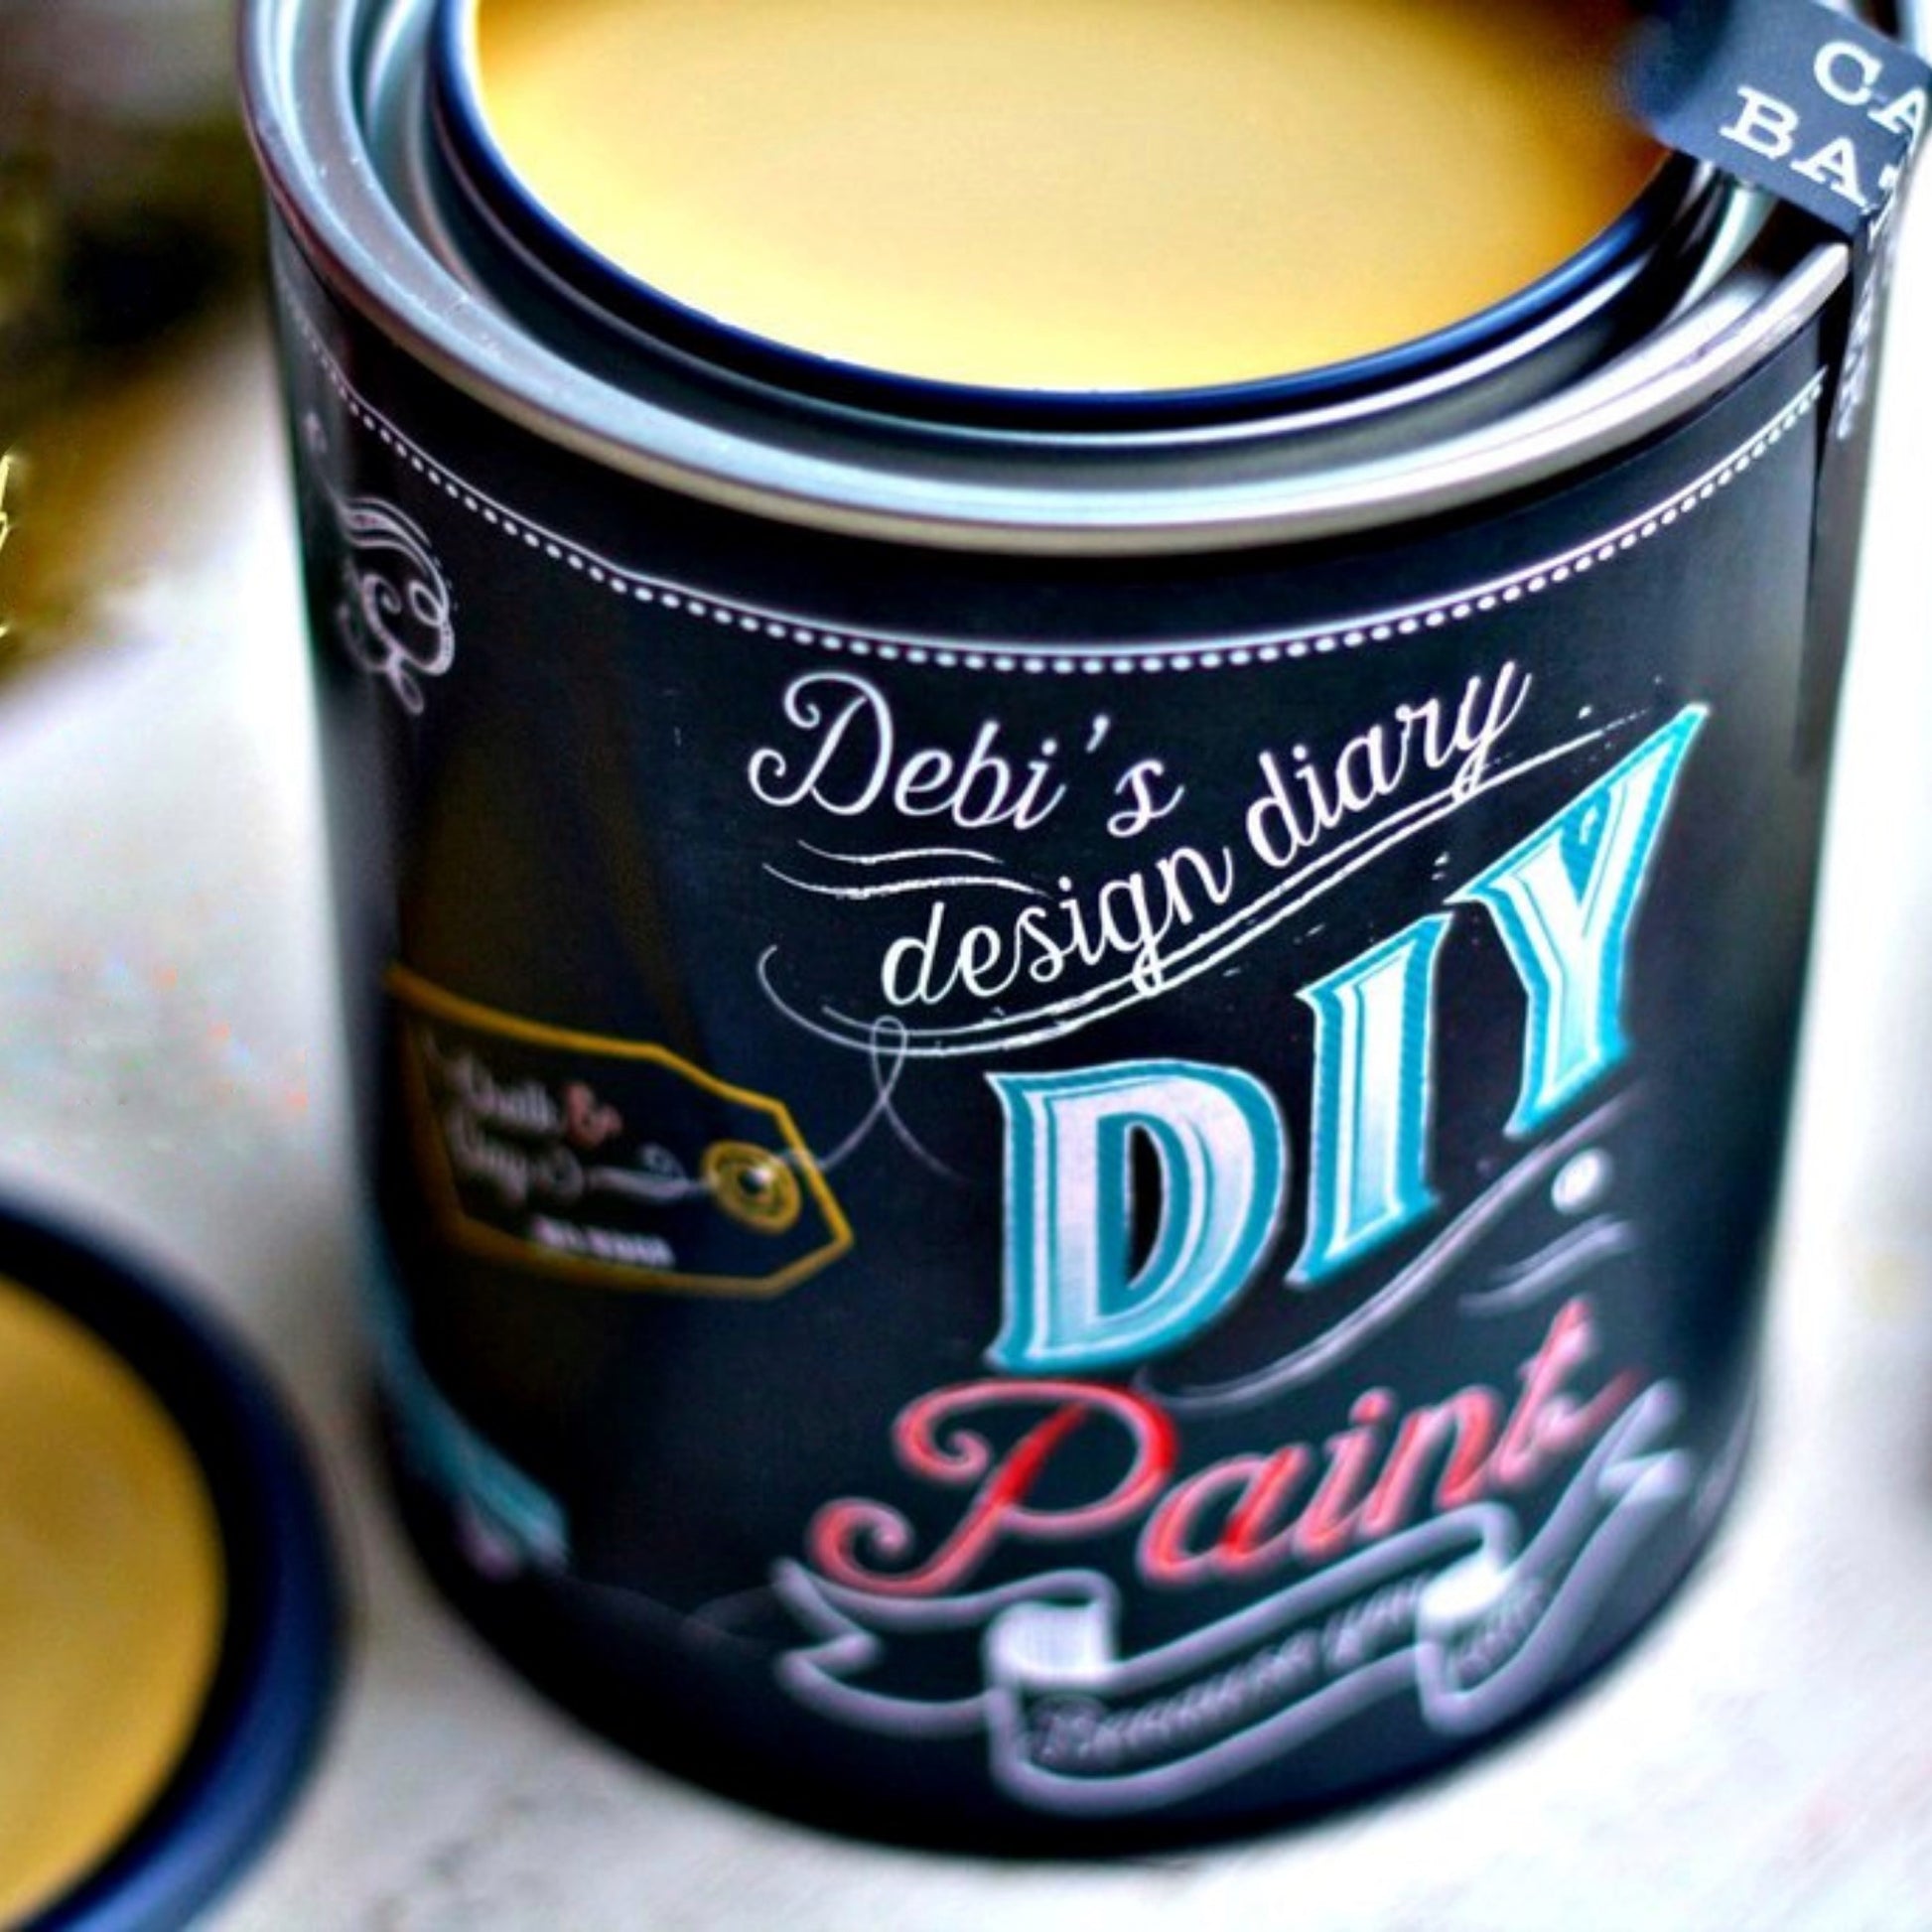 Cake Batter - Debi's Design Diary DIY Paint available at Milton's Daughter